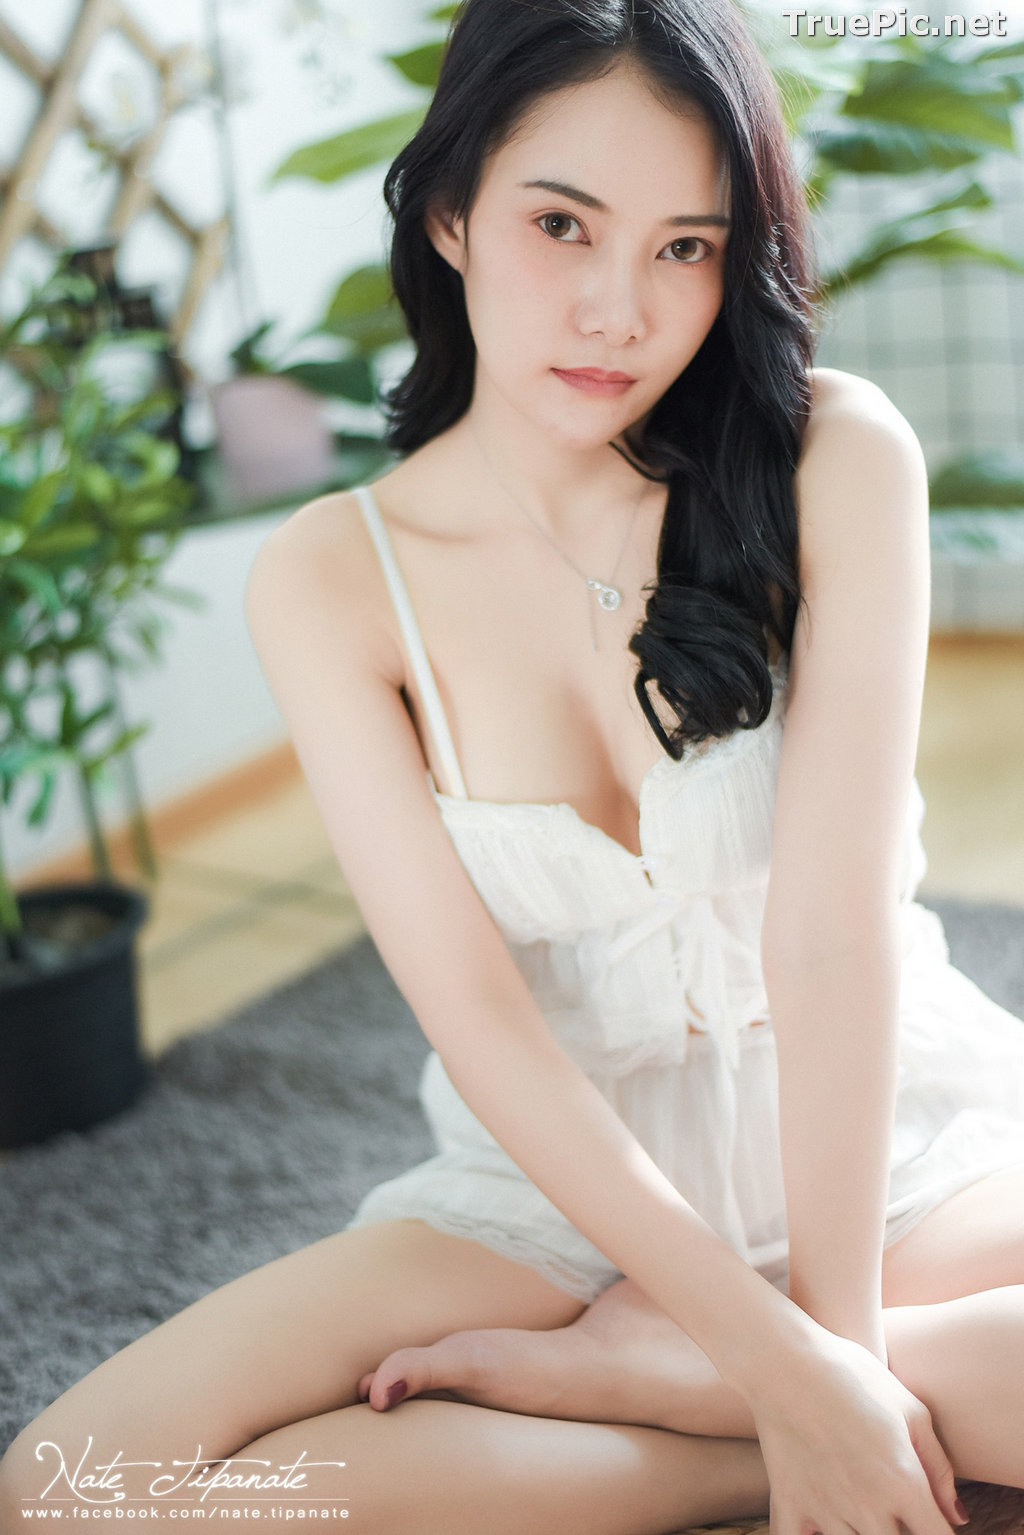 Image Thailand Model - Nattanicha Pw - Beautiful In White Sleepwear - TruePic.net - Picture-1